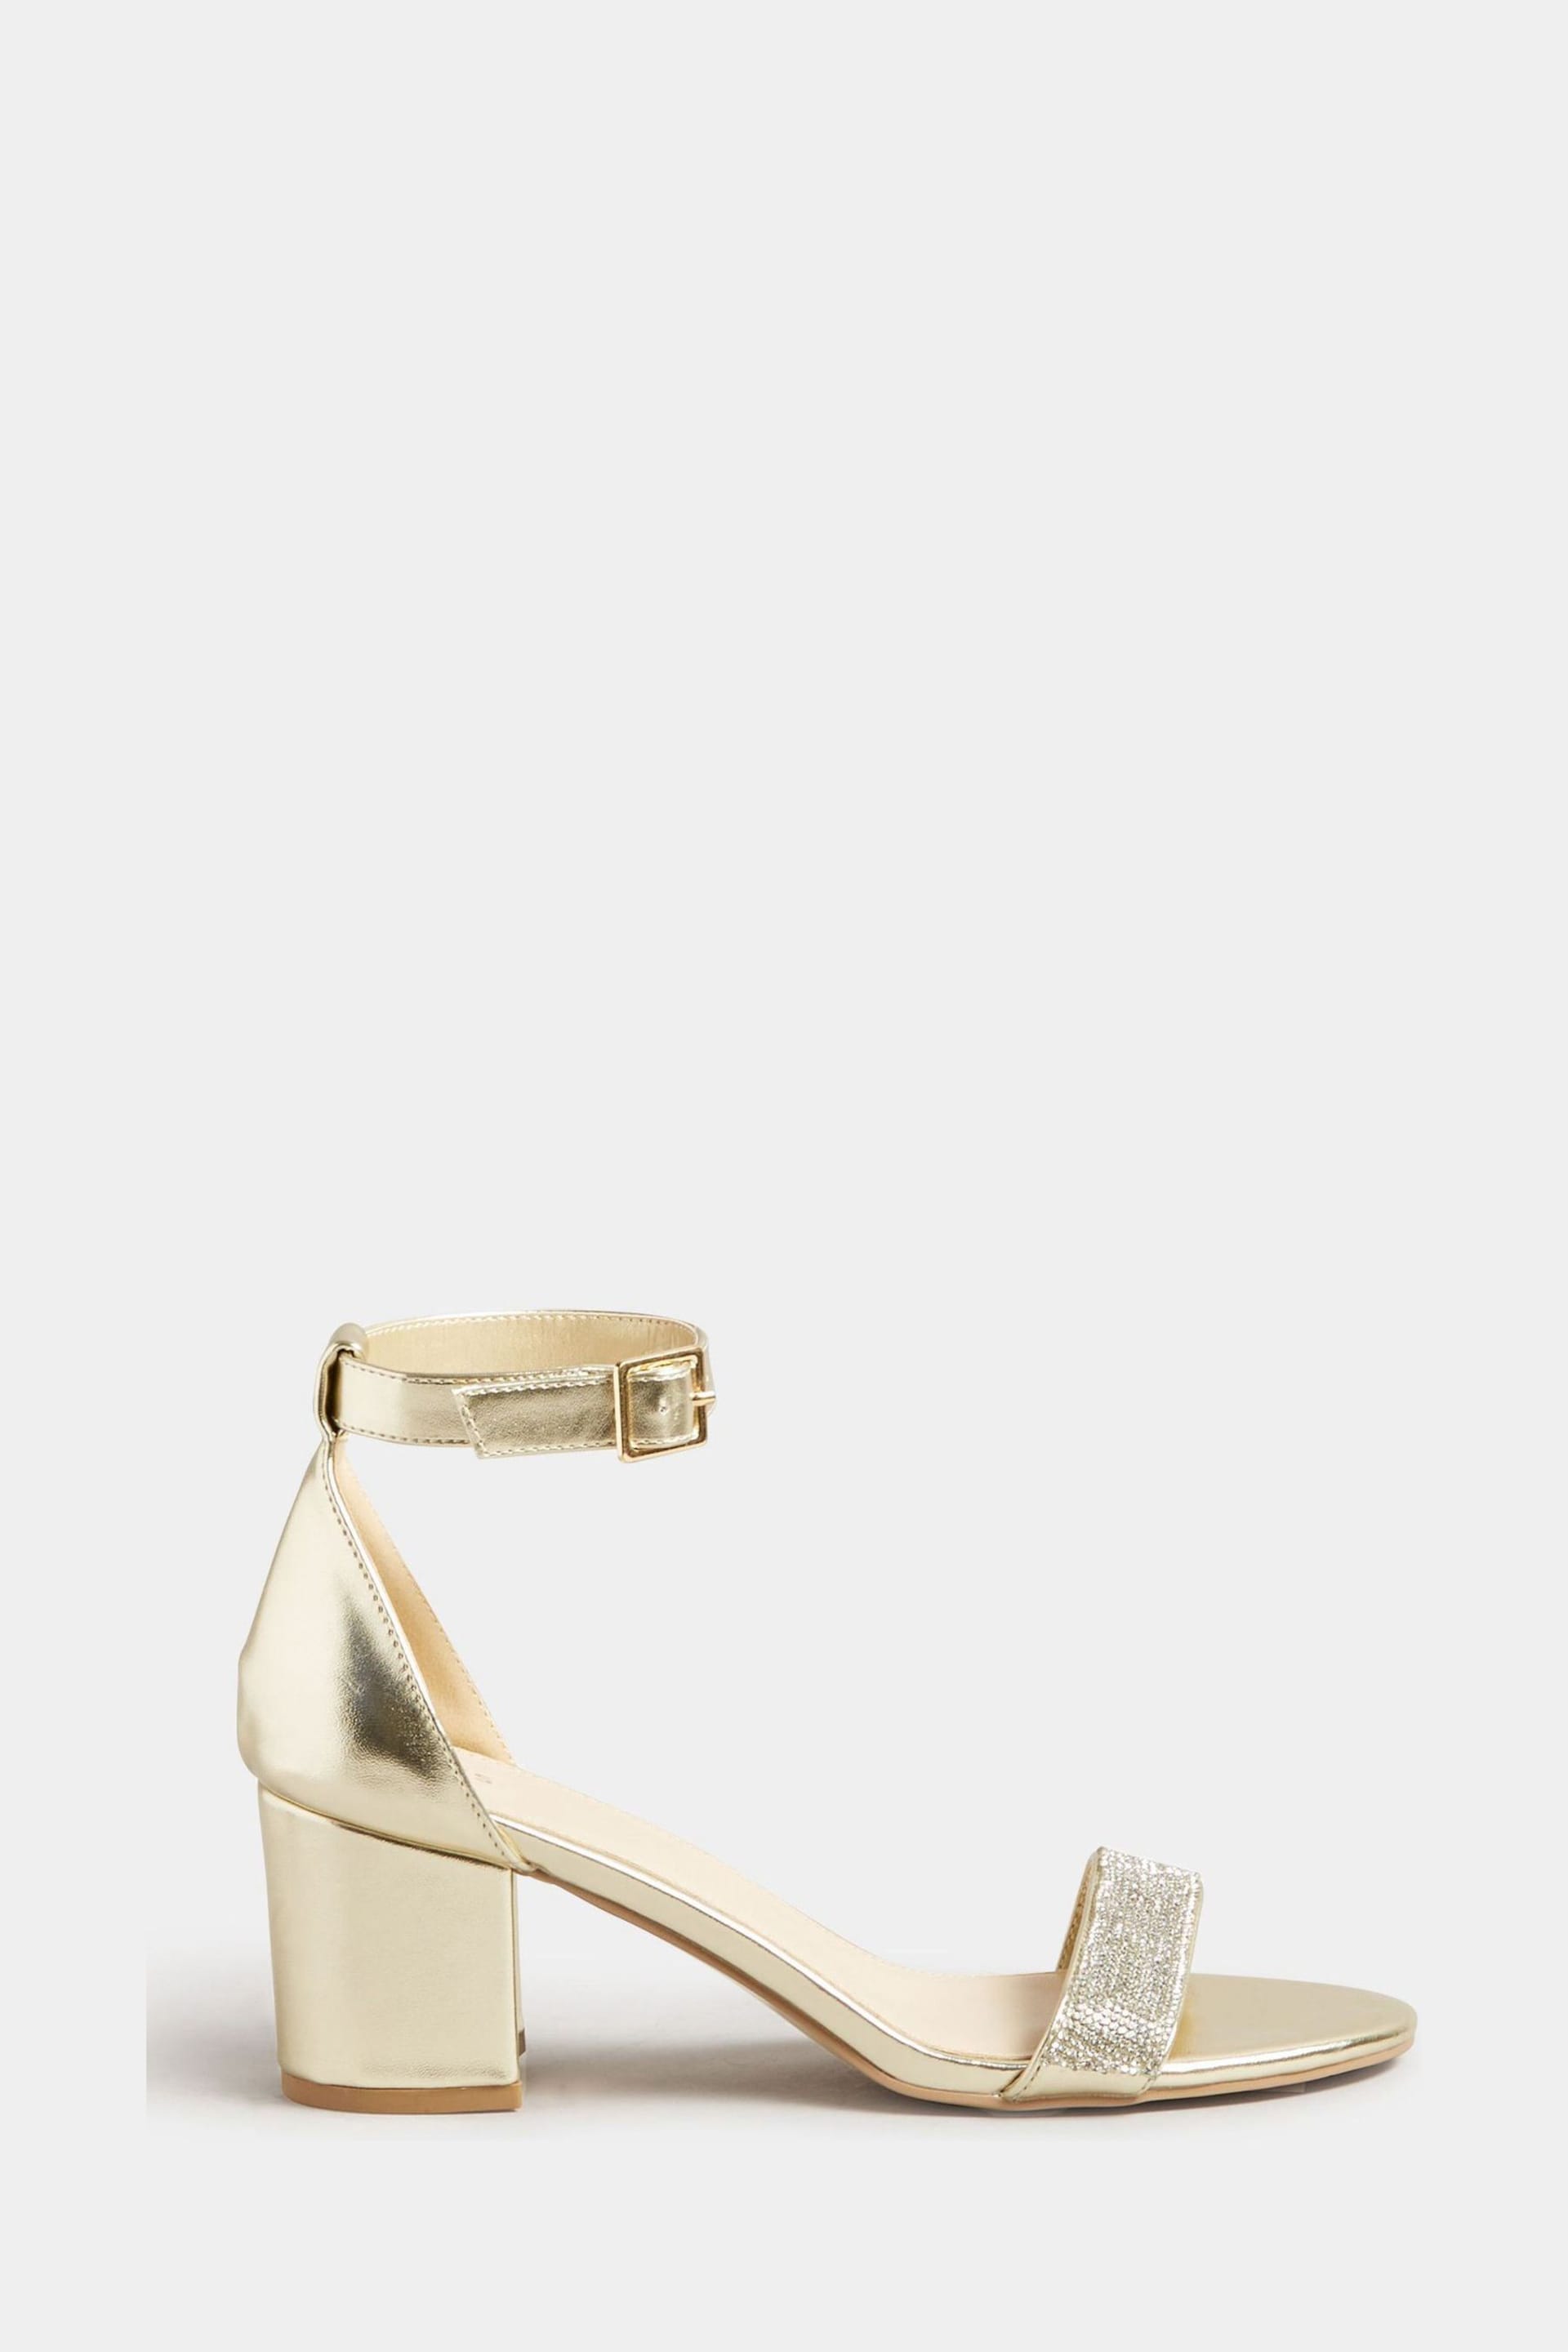 Long Tall Sally Gold Block Heel Diamante Sandal - Image 1 of 4